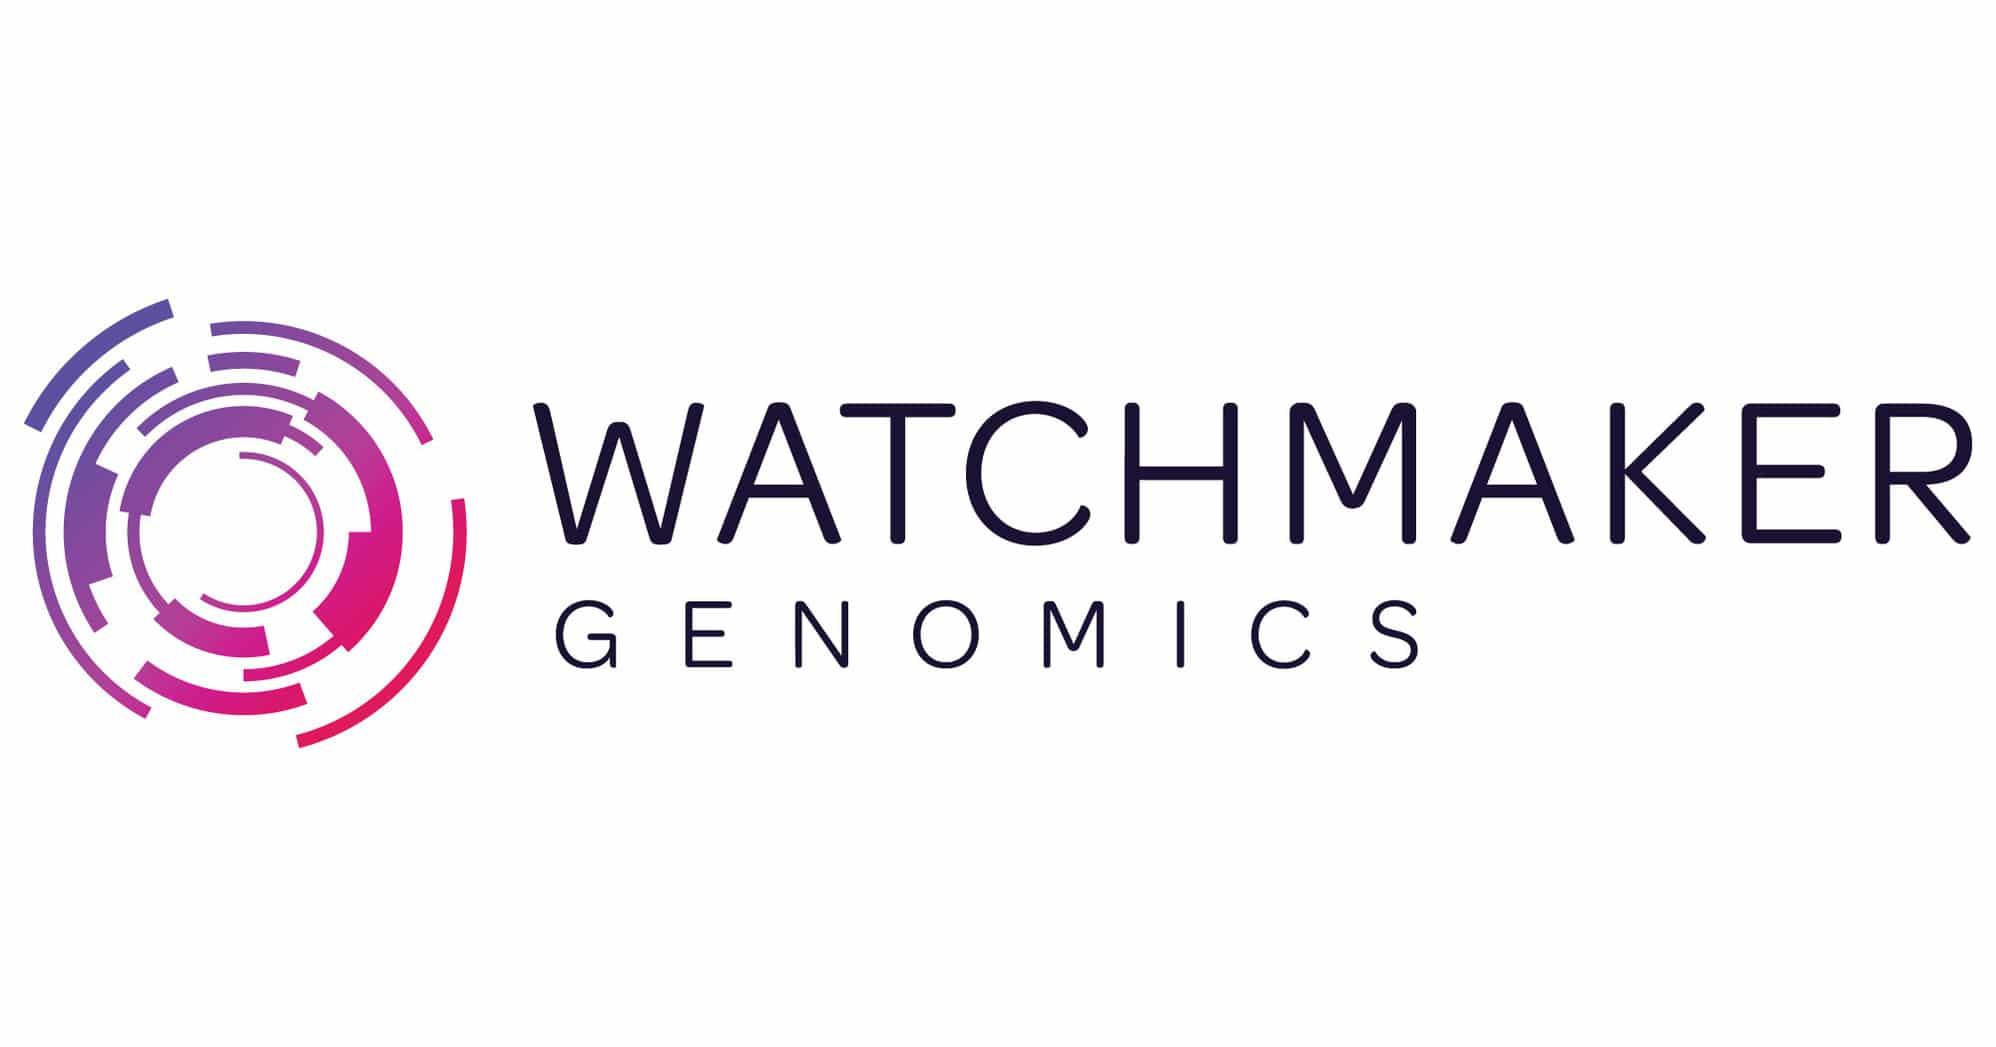 KO Client Watchmaker Genomics Raises $40M Series A Round Image